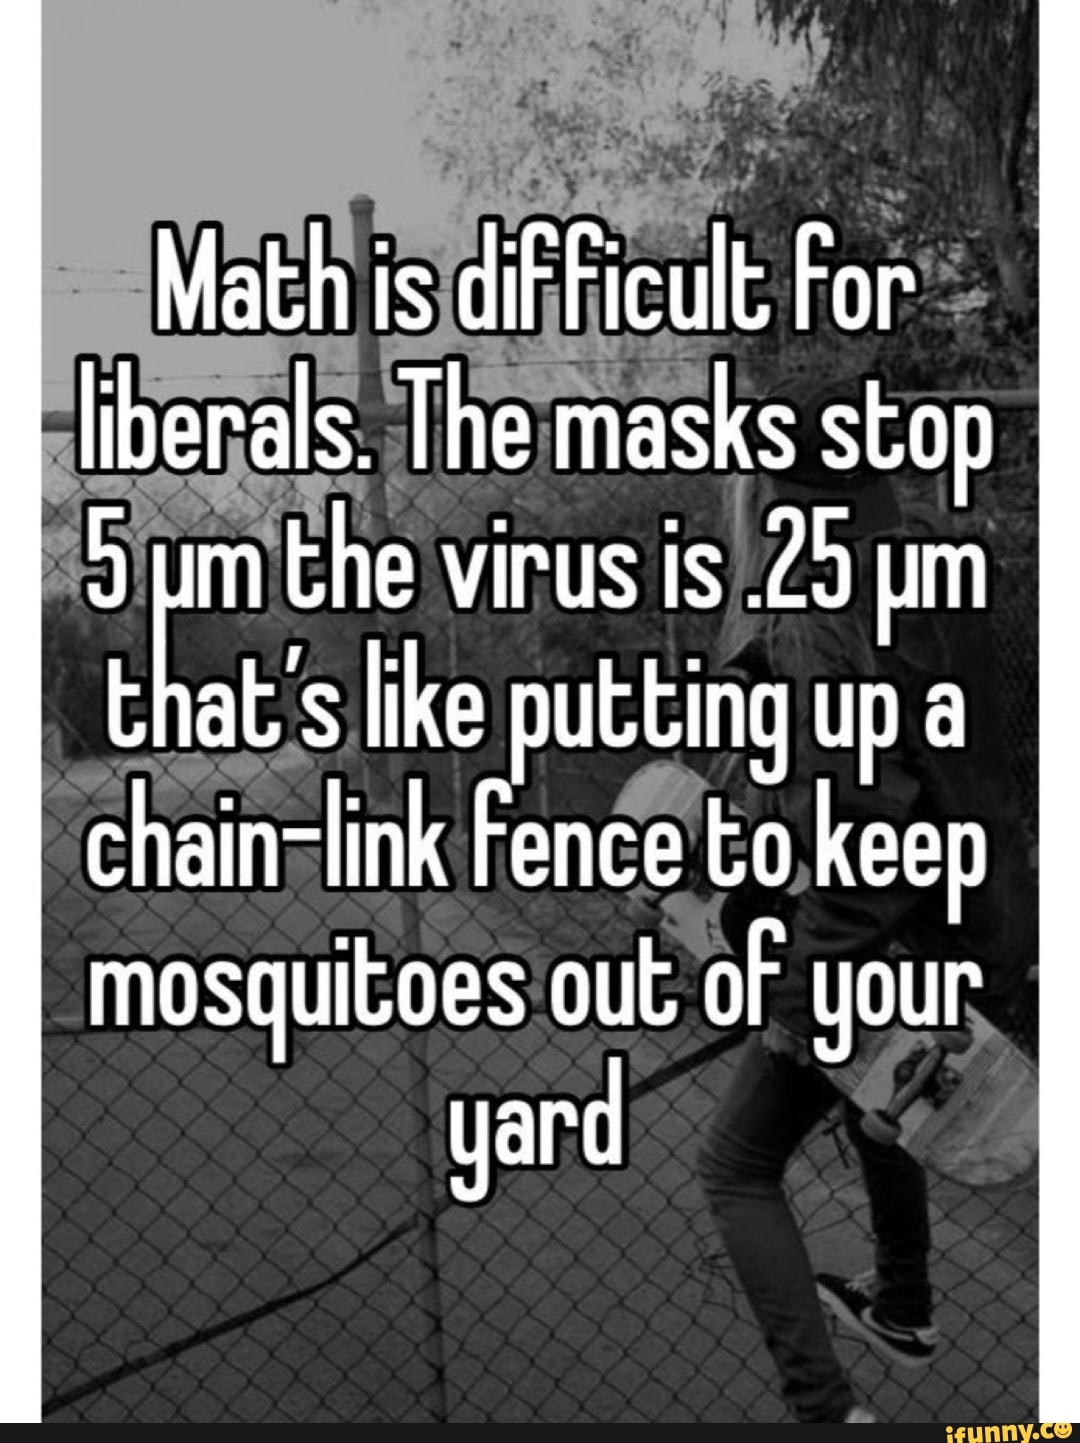 fences app virus